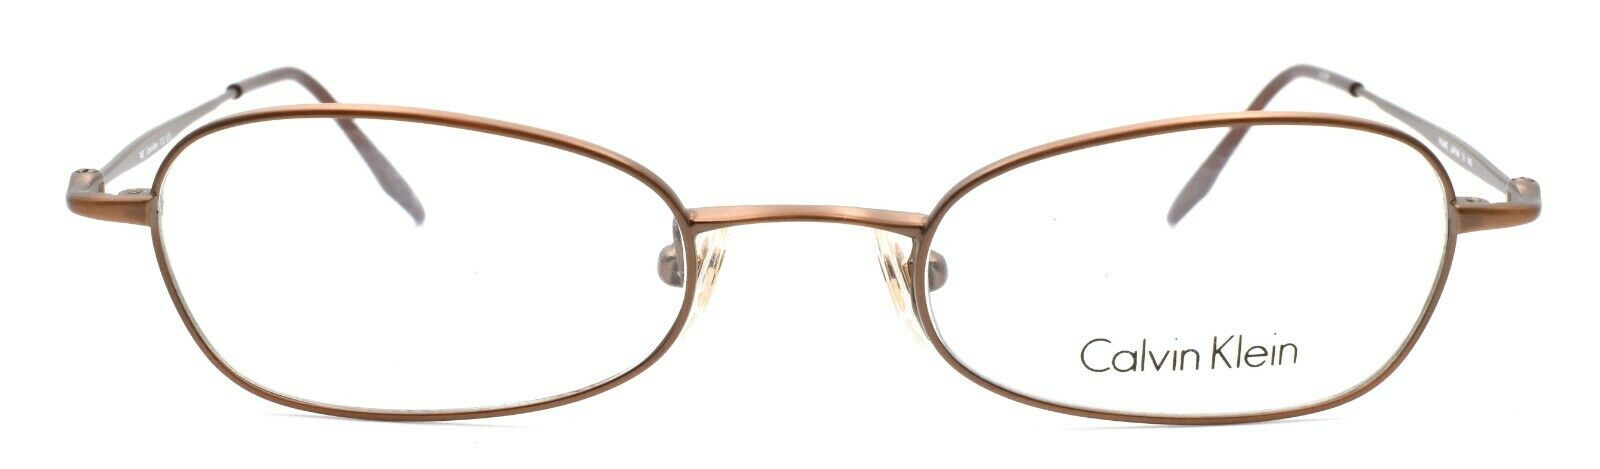 2-Calvin Klein 173 575 Women's Eyeglasses Frames 47-19-140 Bronze JAPAN-Does not apply-IKSpecs